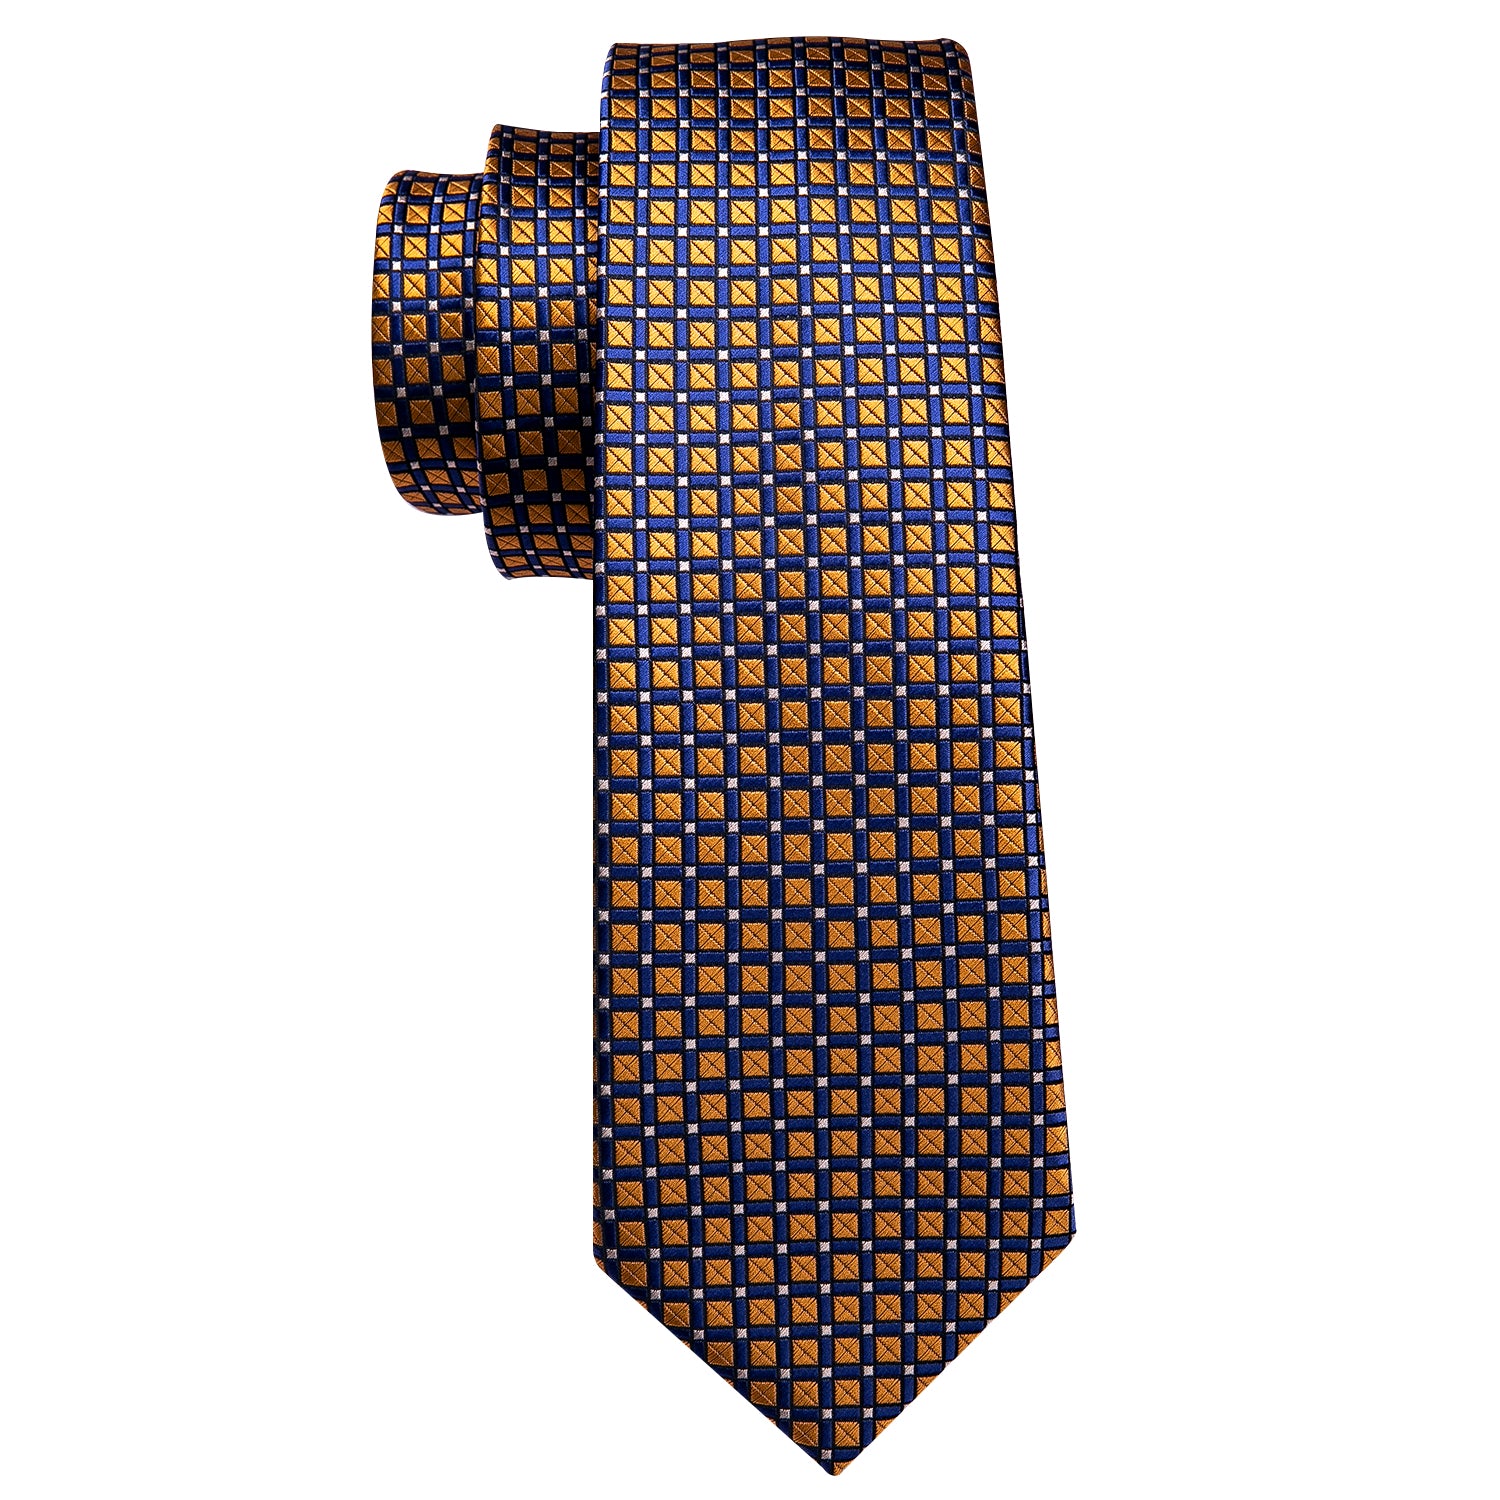 Barry Wang Brown Tie Blue Polka Dot Men's Silk Tie Hanky Cufflinks Set